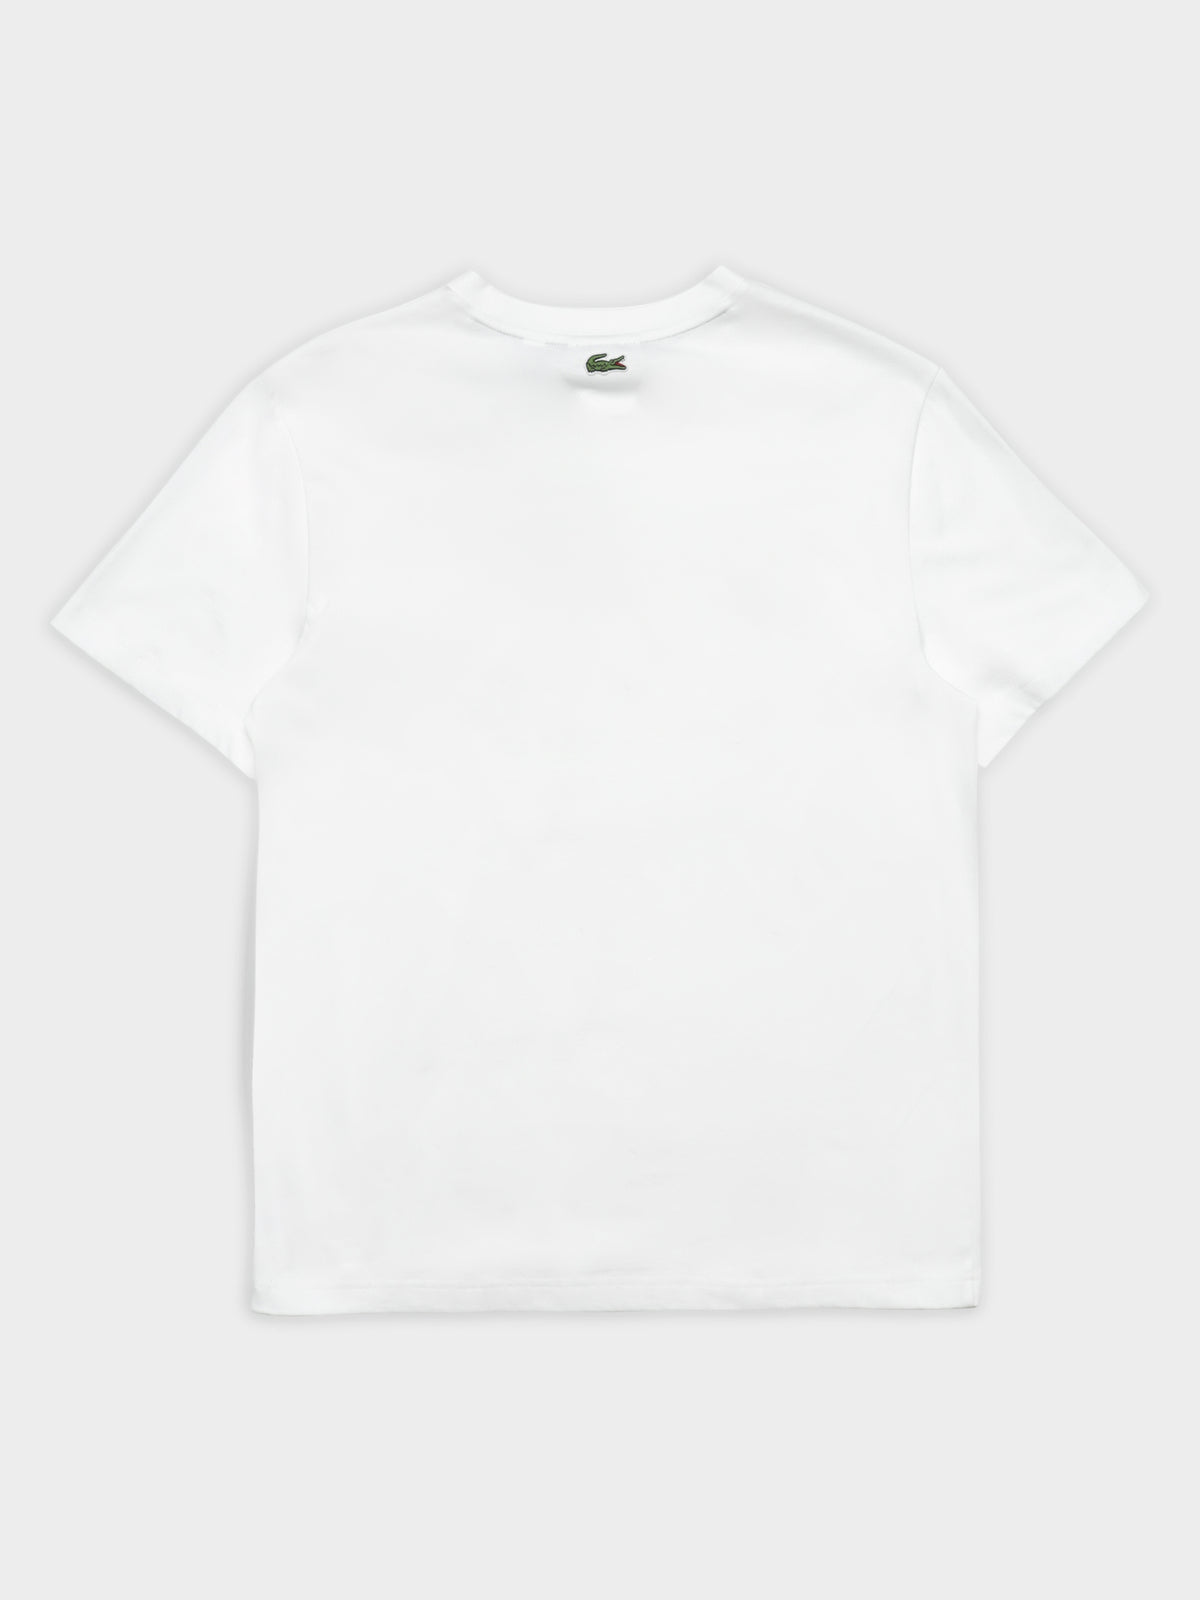 Lifestyle Logo Croc T-Shirt in White